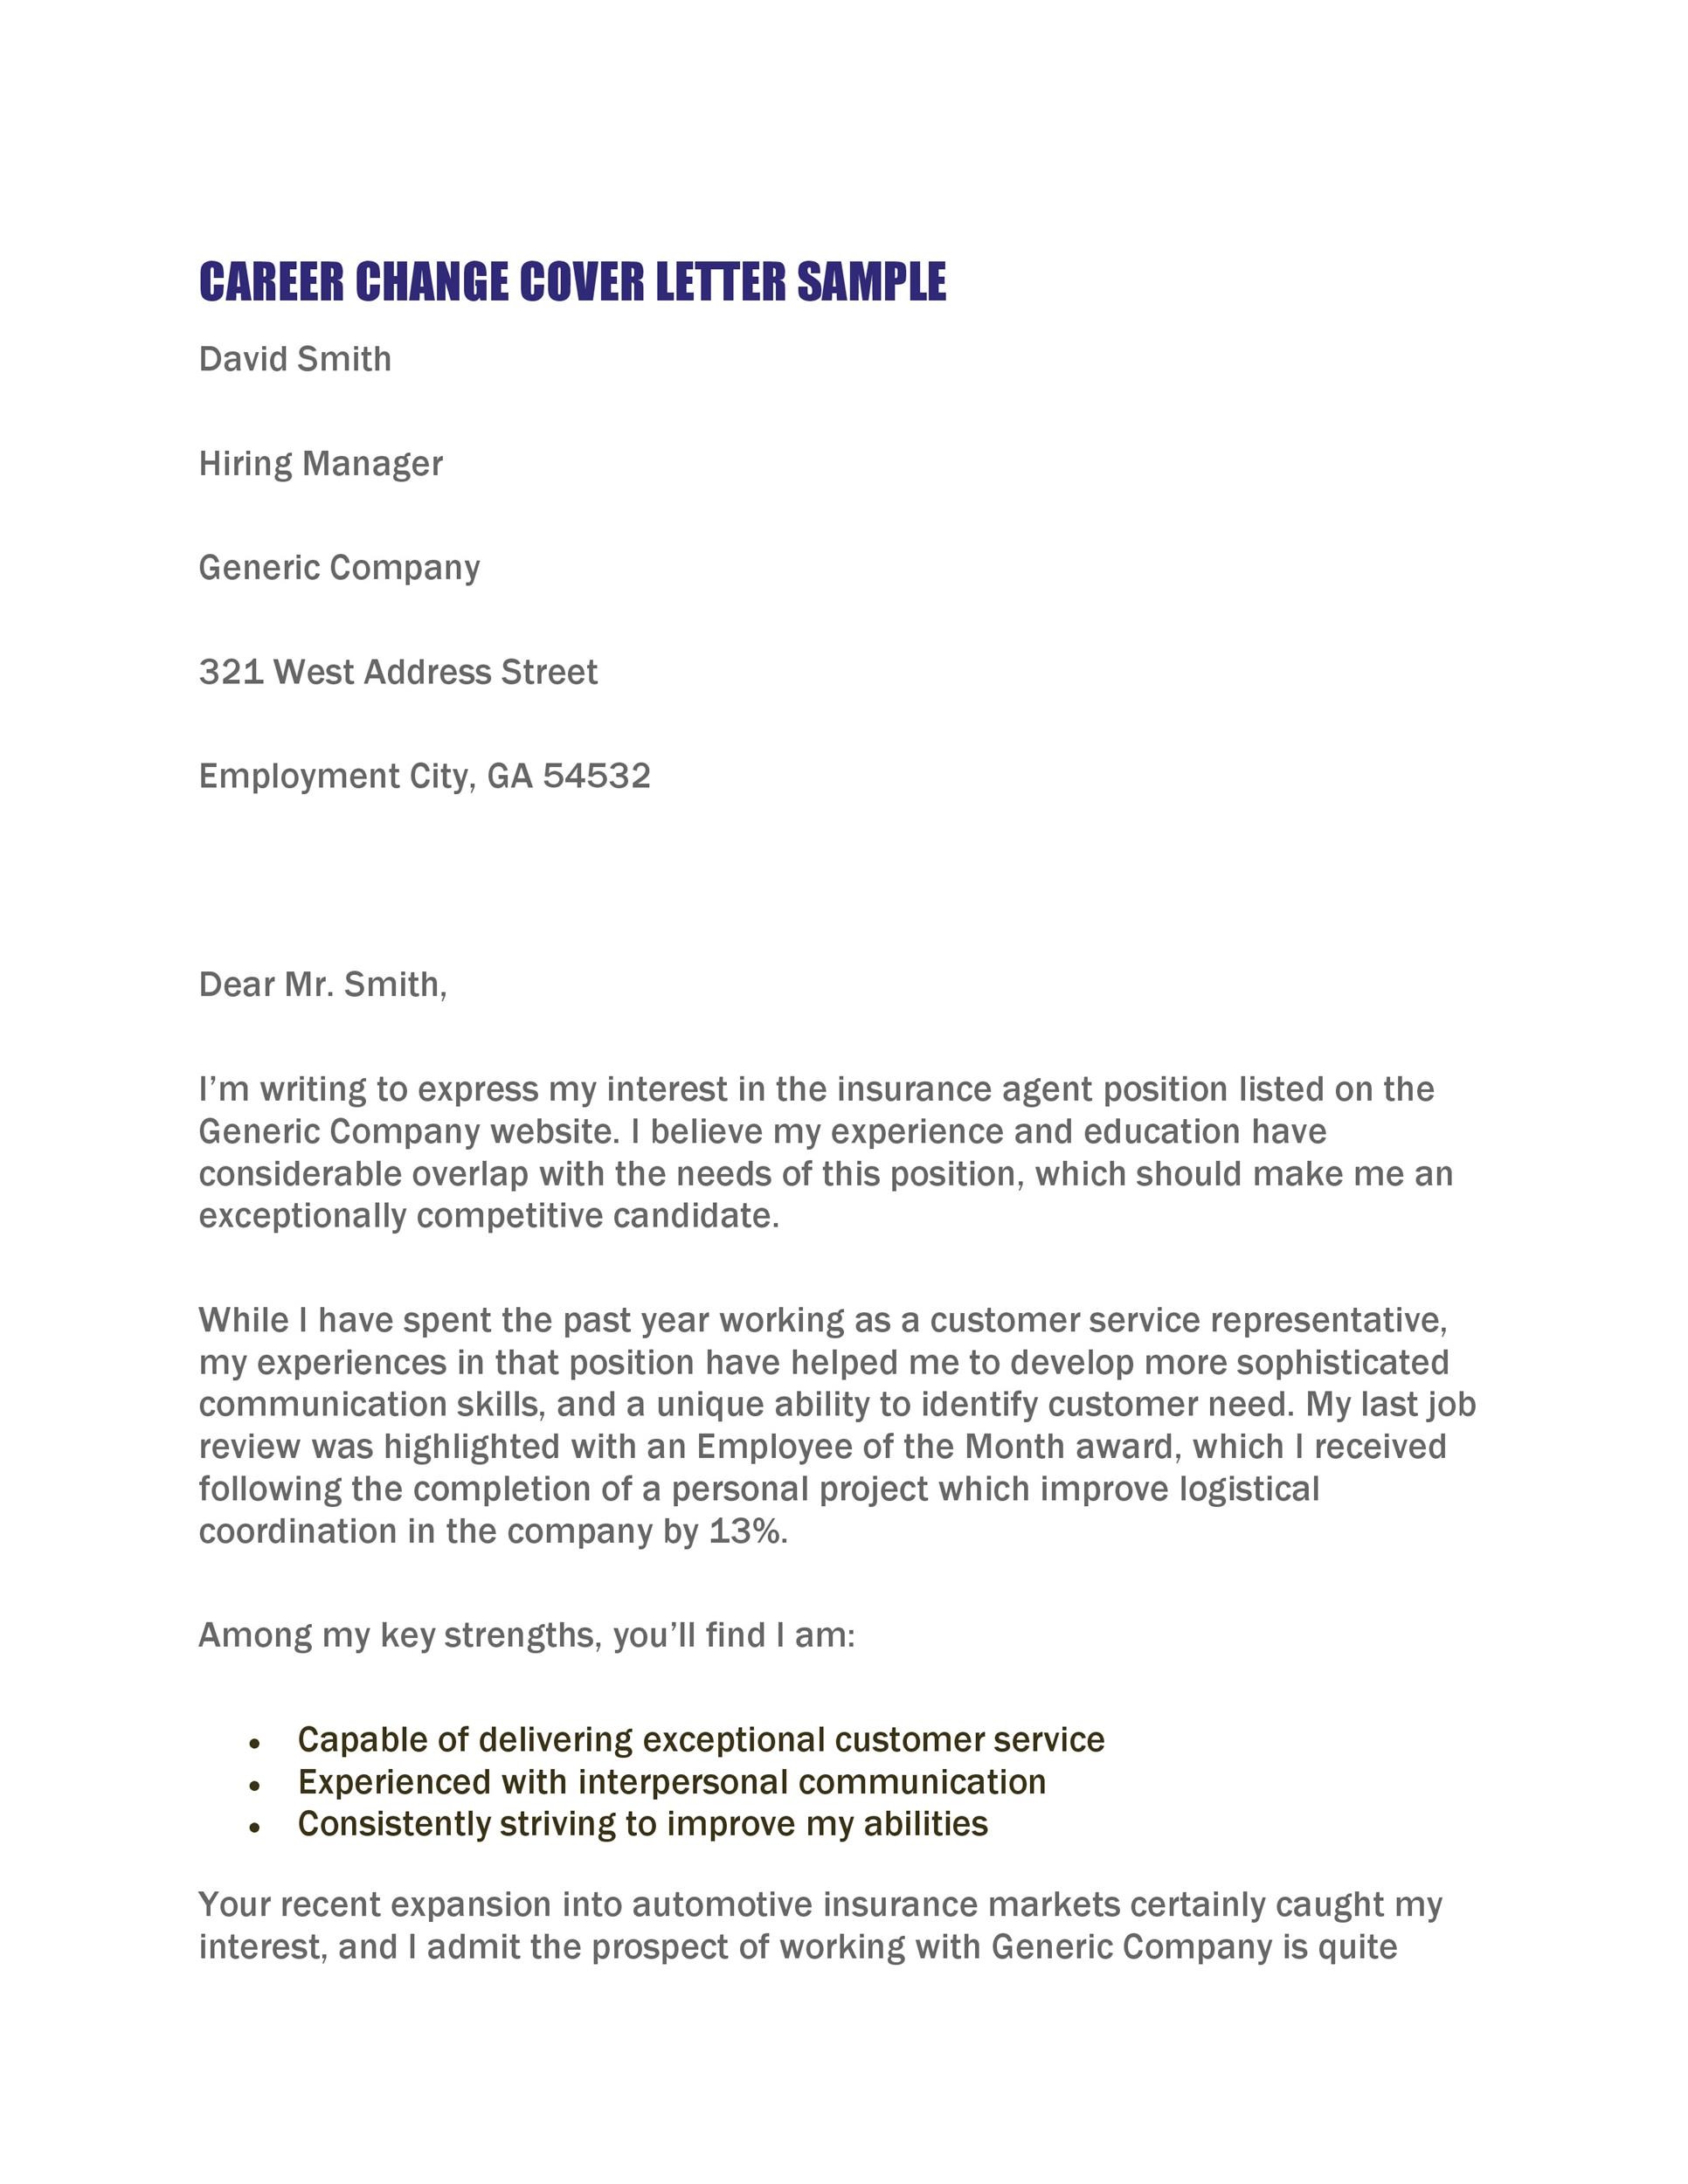 job application letter for change of career